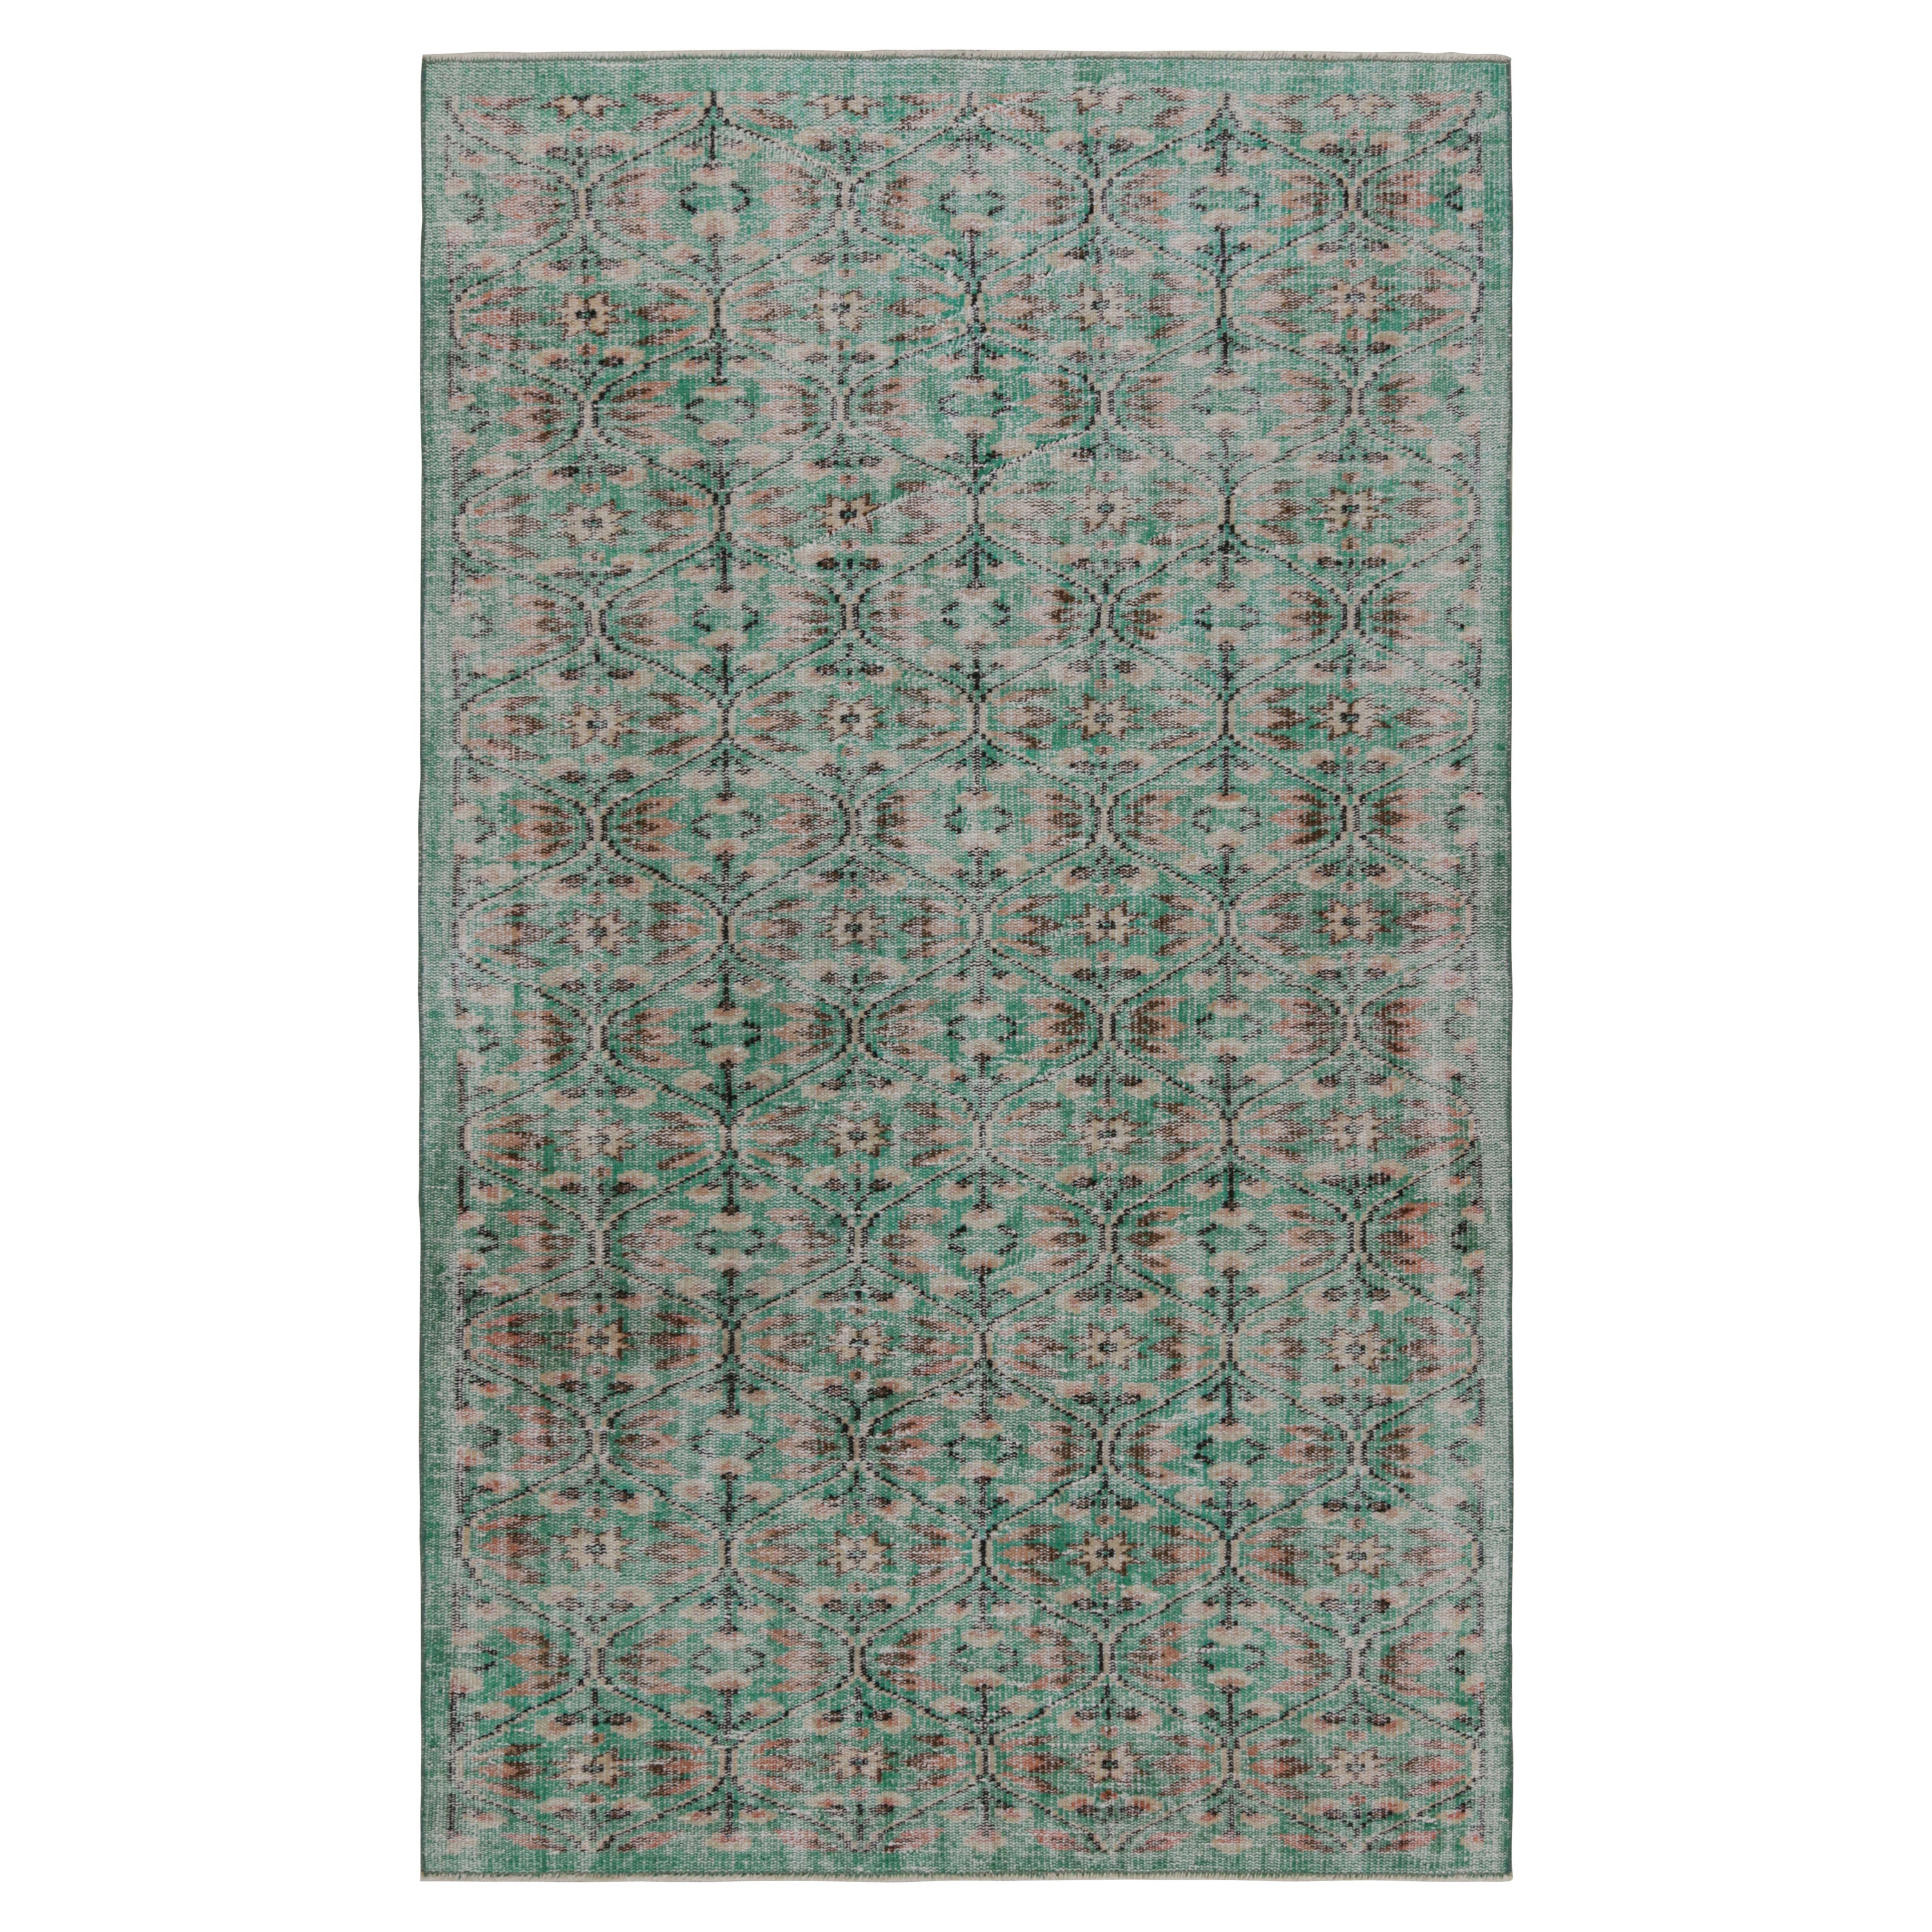 Vintage Zeki Müren Rug in Teal with Geometric Patterns, from Rug & Kilim